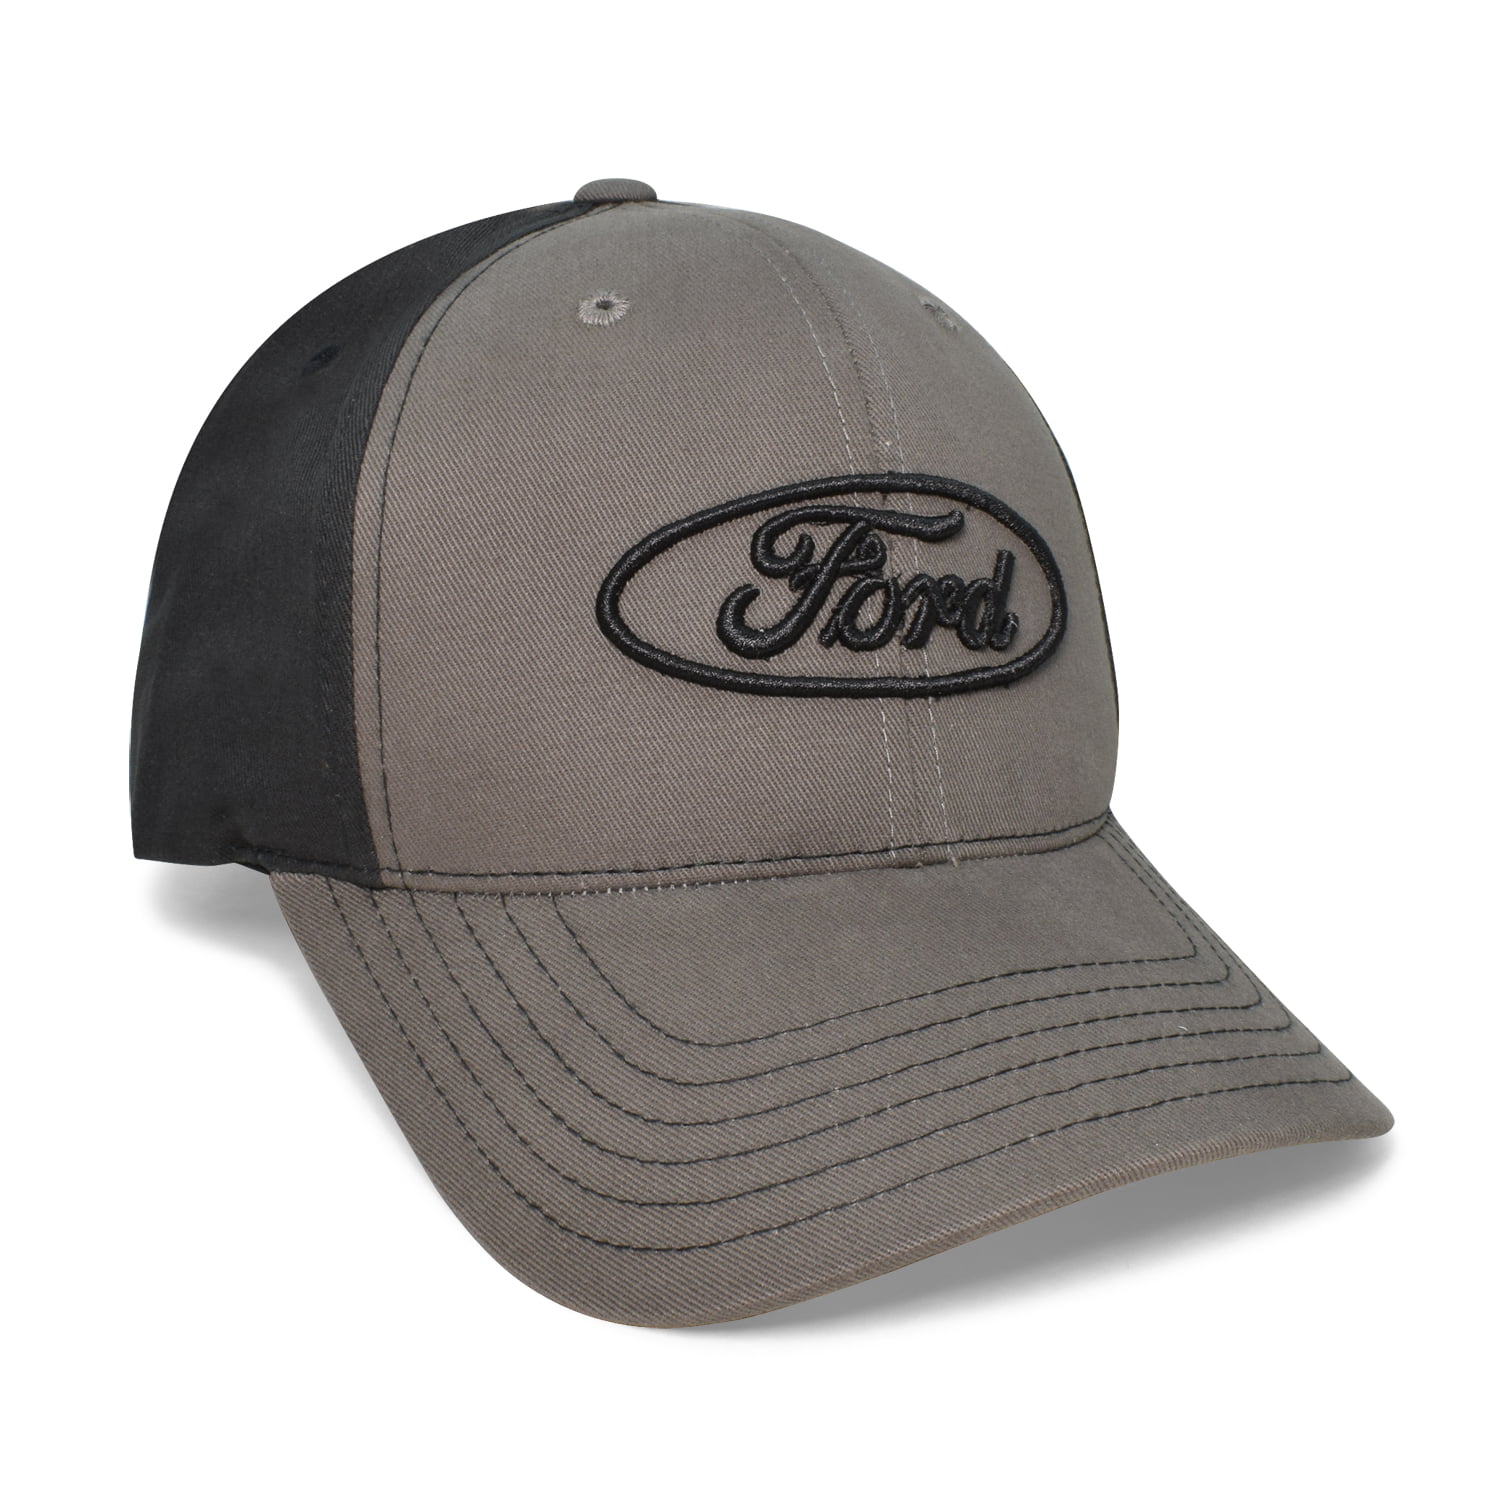 Ford Cap Established 1903 Cream/Tan & Black Baseball Hat Official Licensed NEW